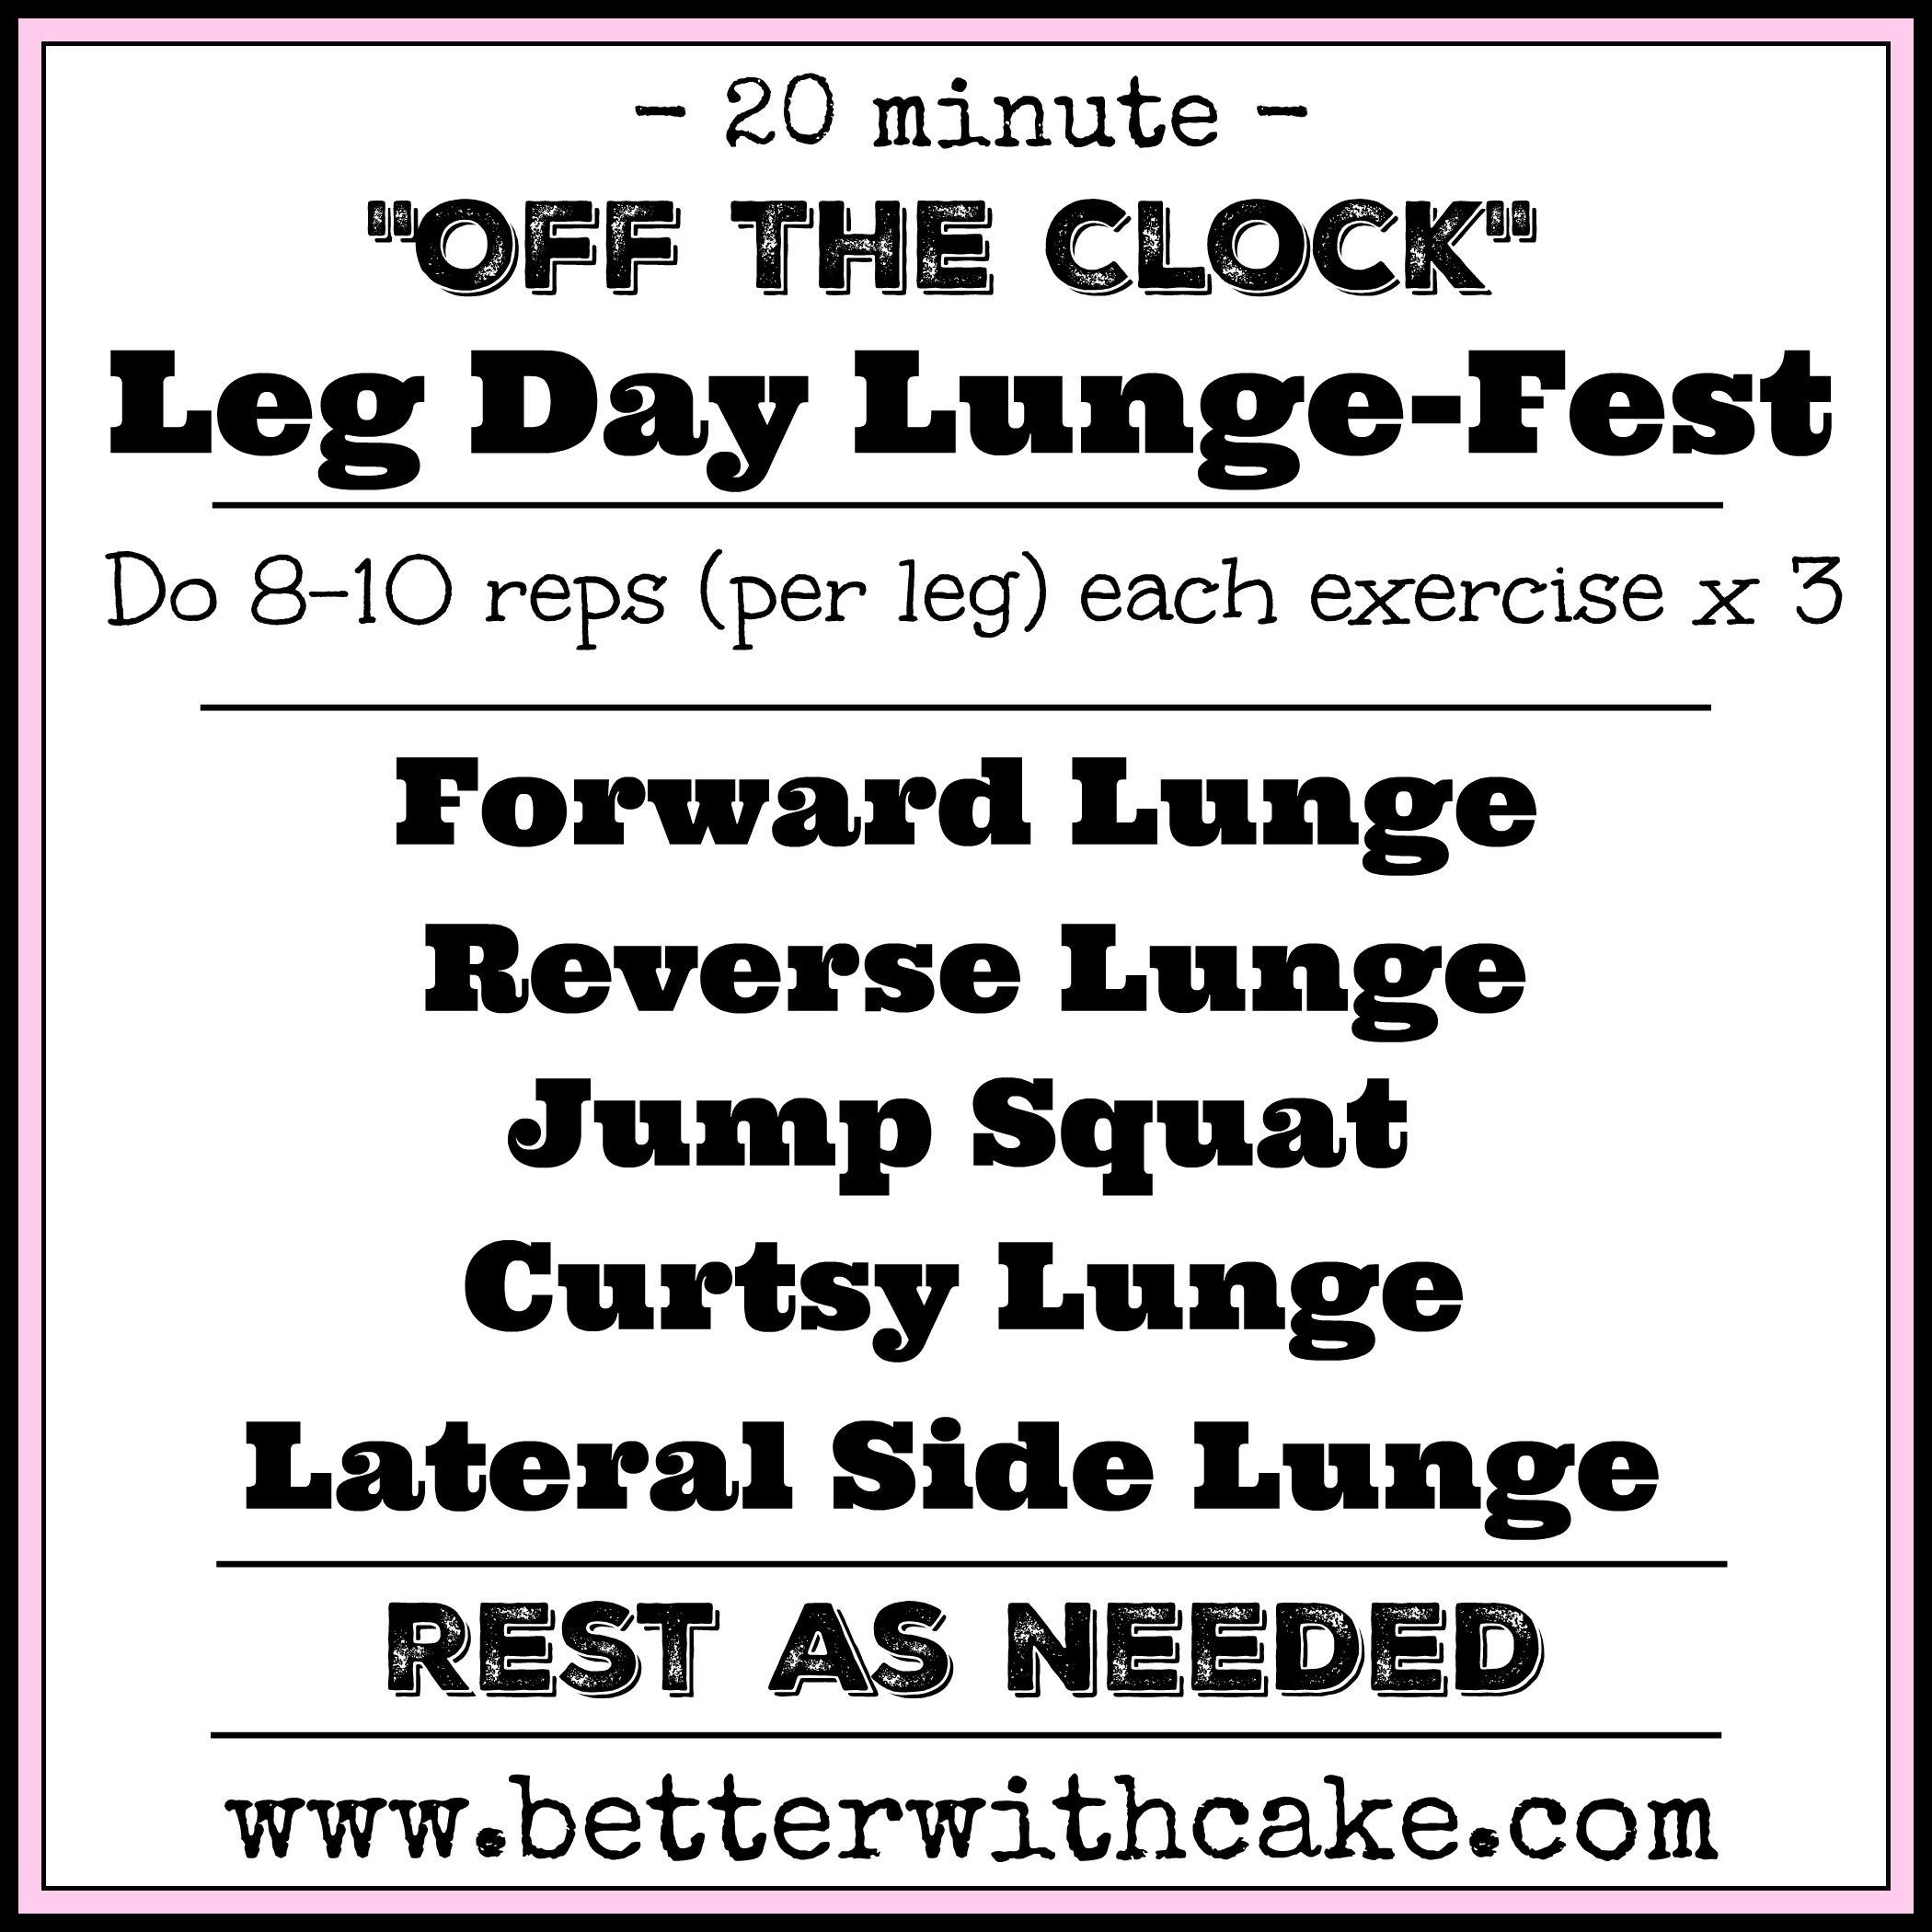 20 minute - no equipment - leg workout - www.betterwithcake.com